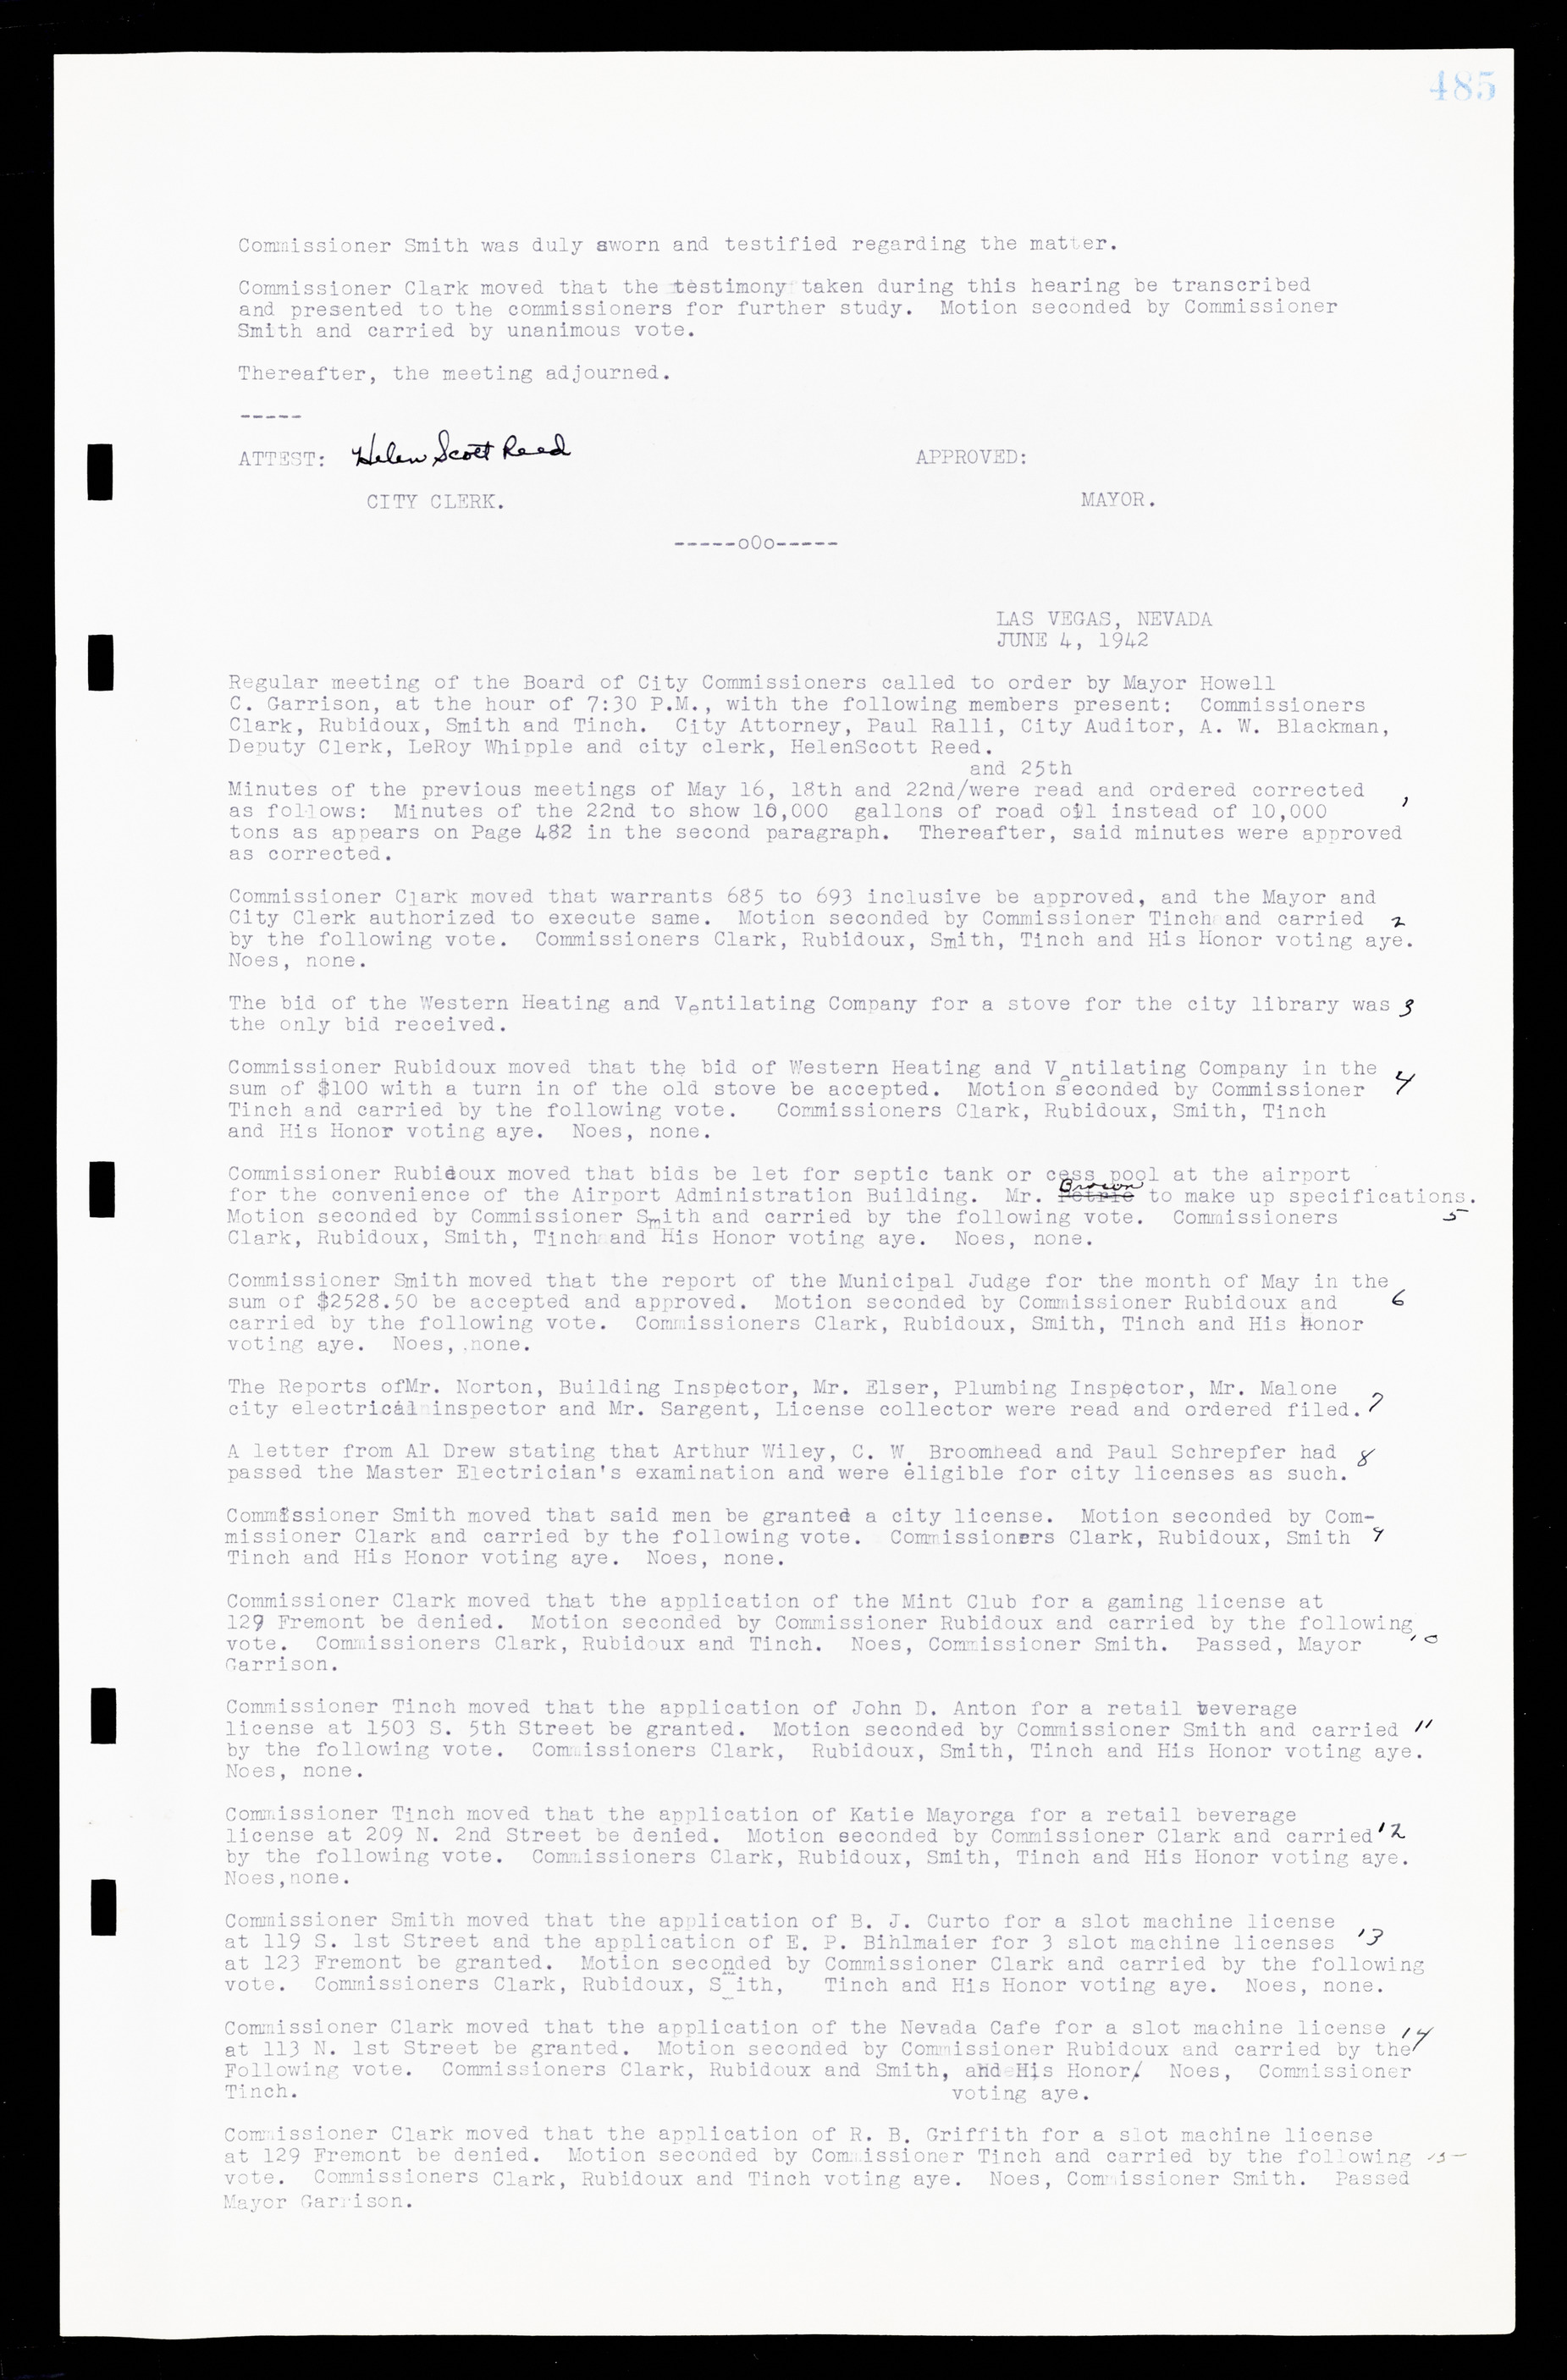 Las Vegas City Commission Minutes, February 17, 1937 to August 4, 1942, lvc000004-513